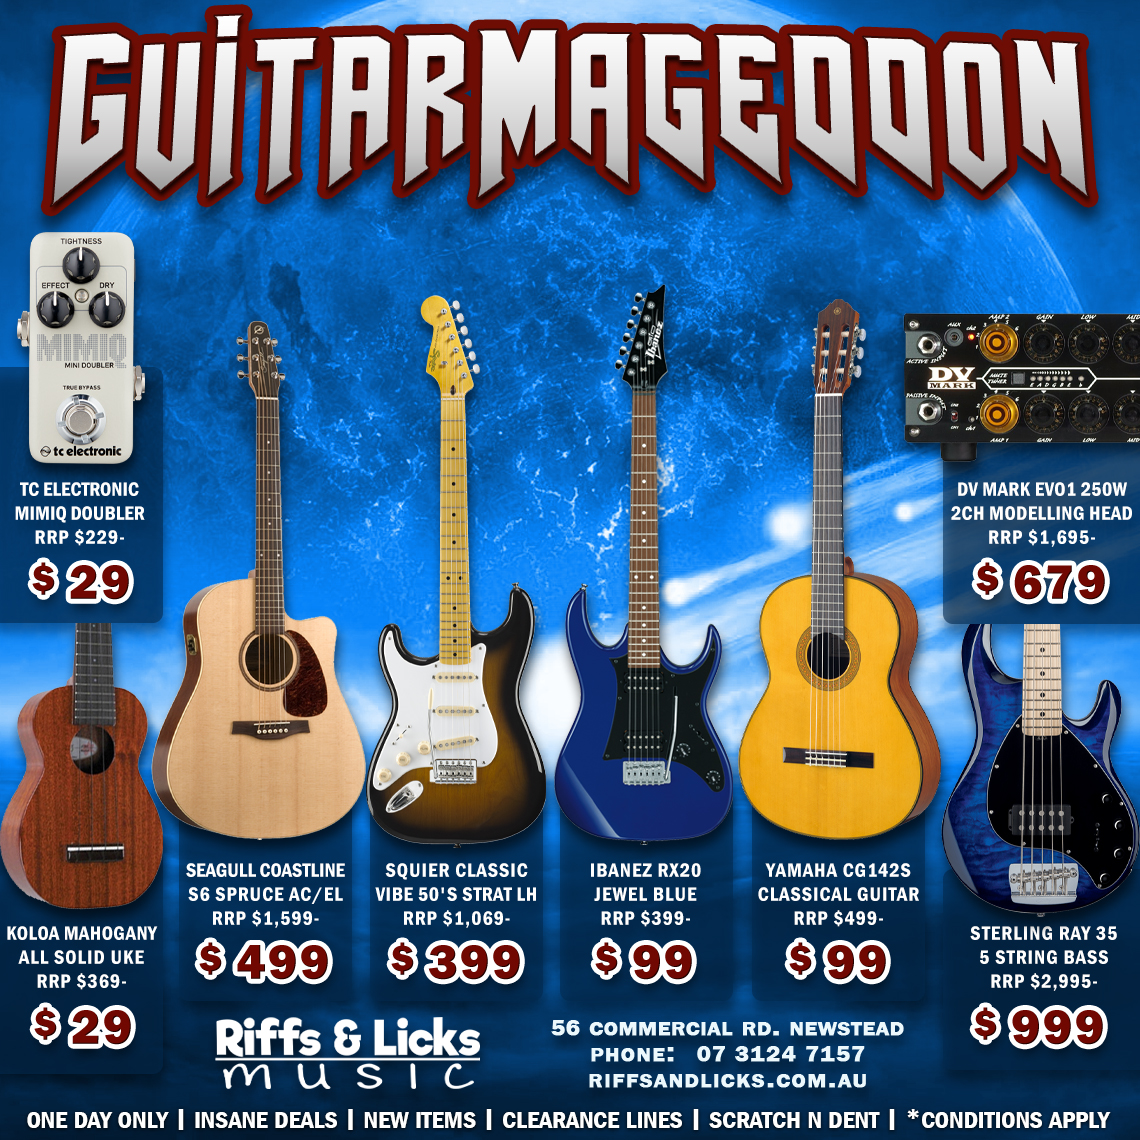 Guitarmageddon 2nd announcement of deals